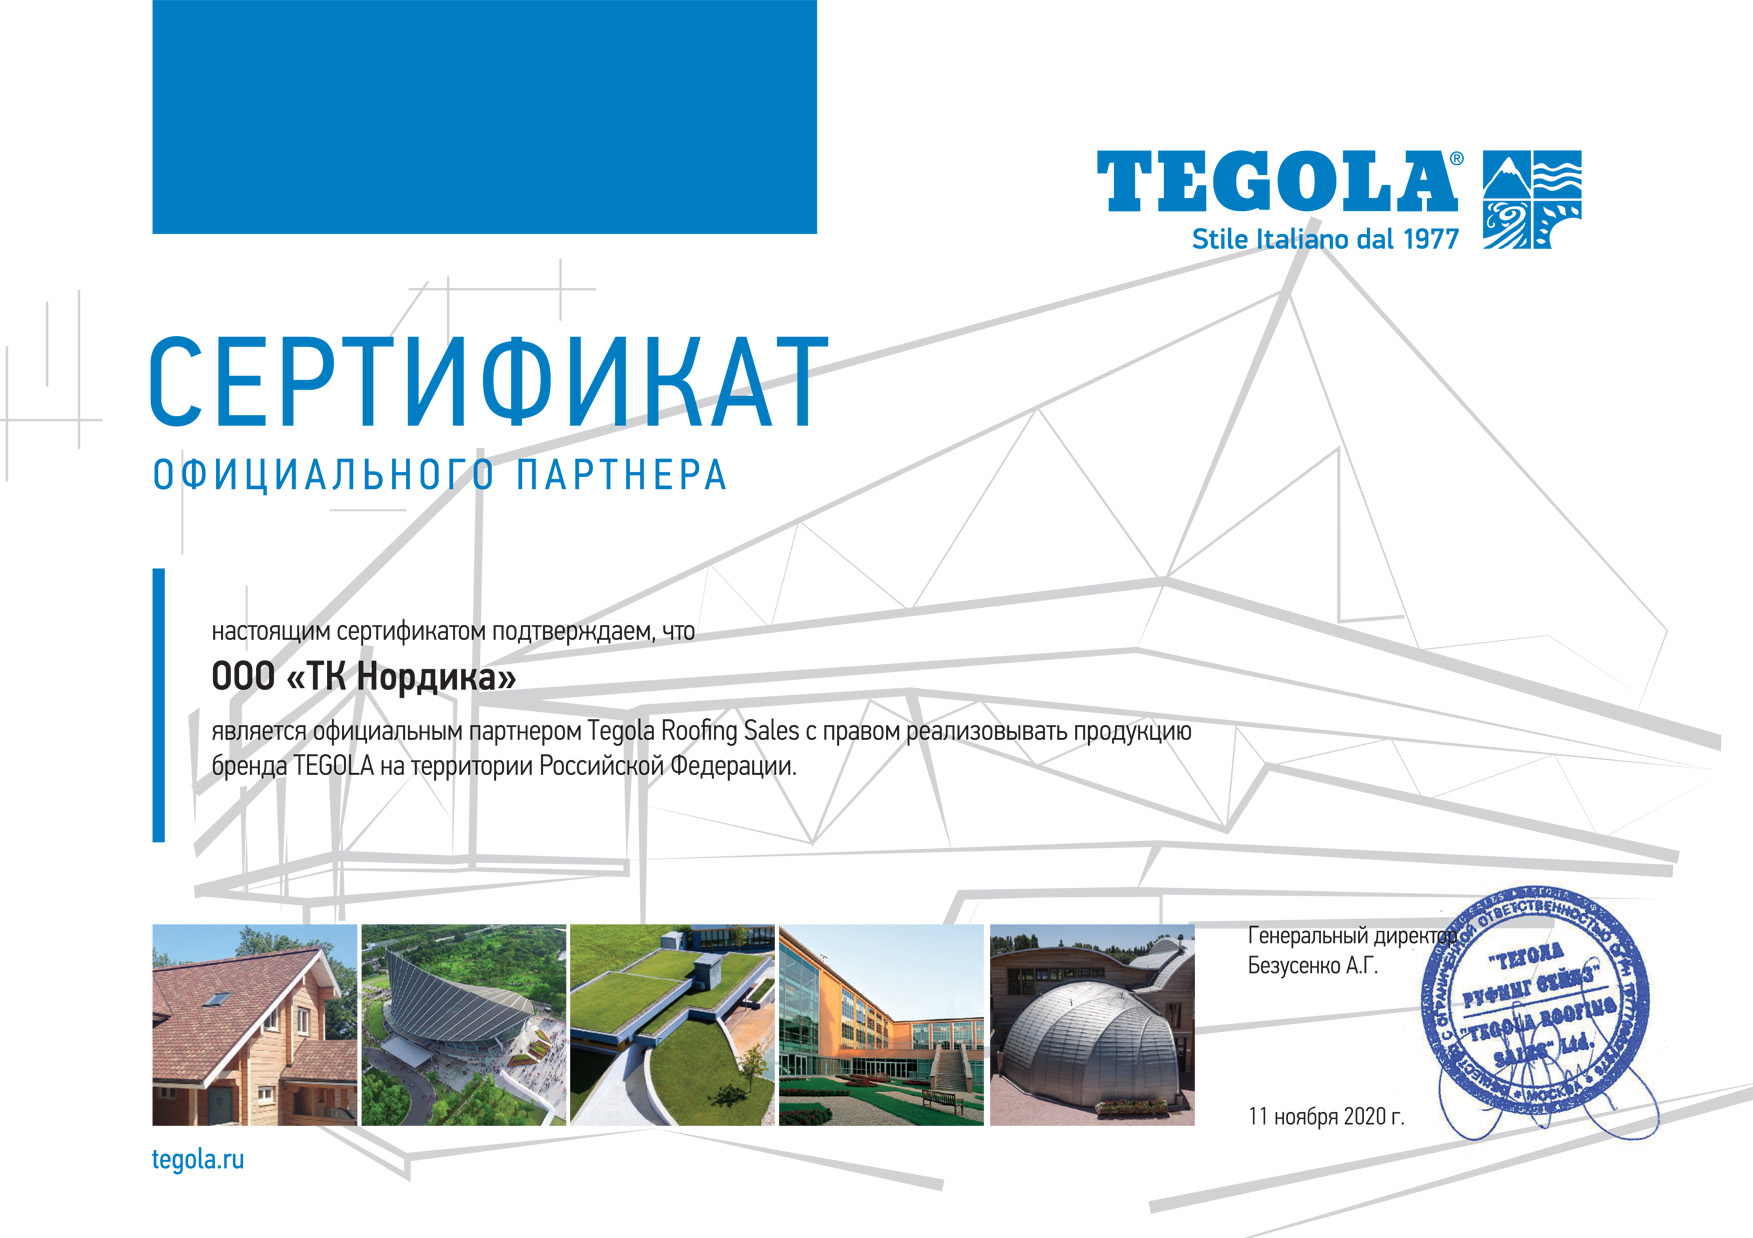 Сертификат Tegola